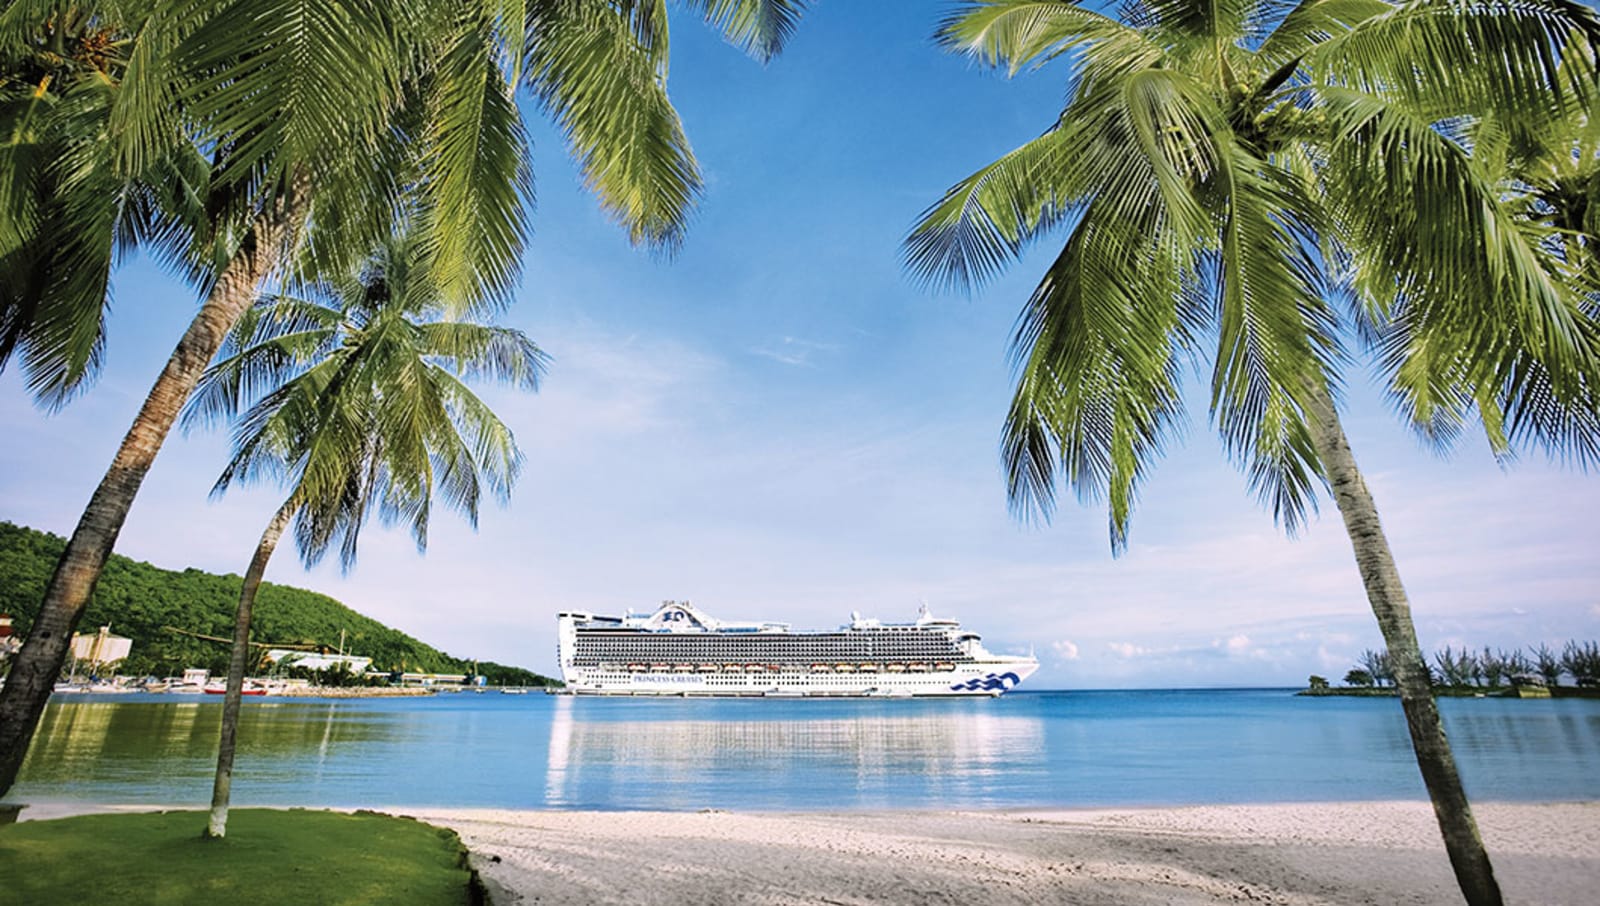 Princess Cruise ship in Jamaica